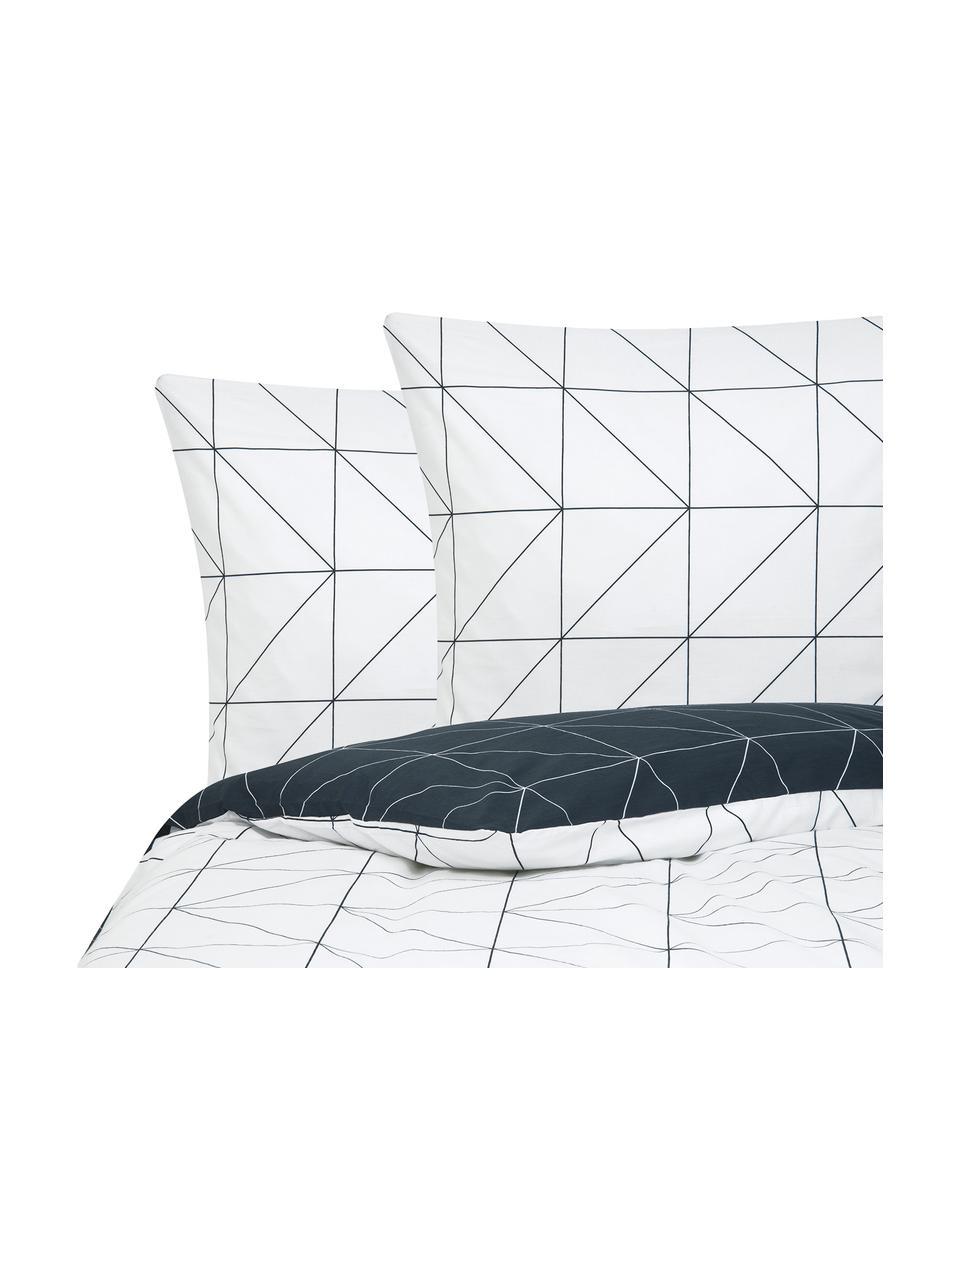 Biancheria da letto reversibile in cotone ranforce Marla, Blu navy & bianco, fantasia, 255 x 200 cm, 3 pz